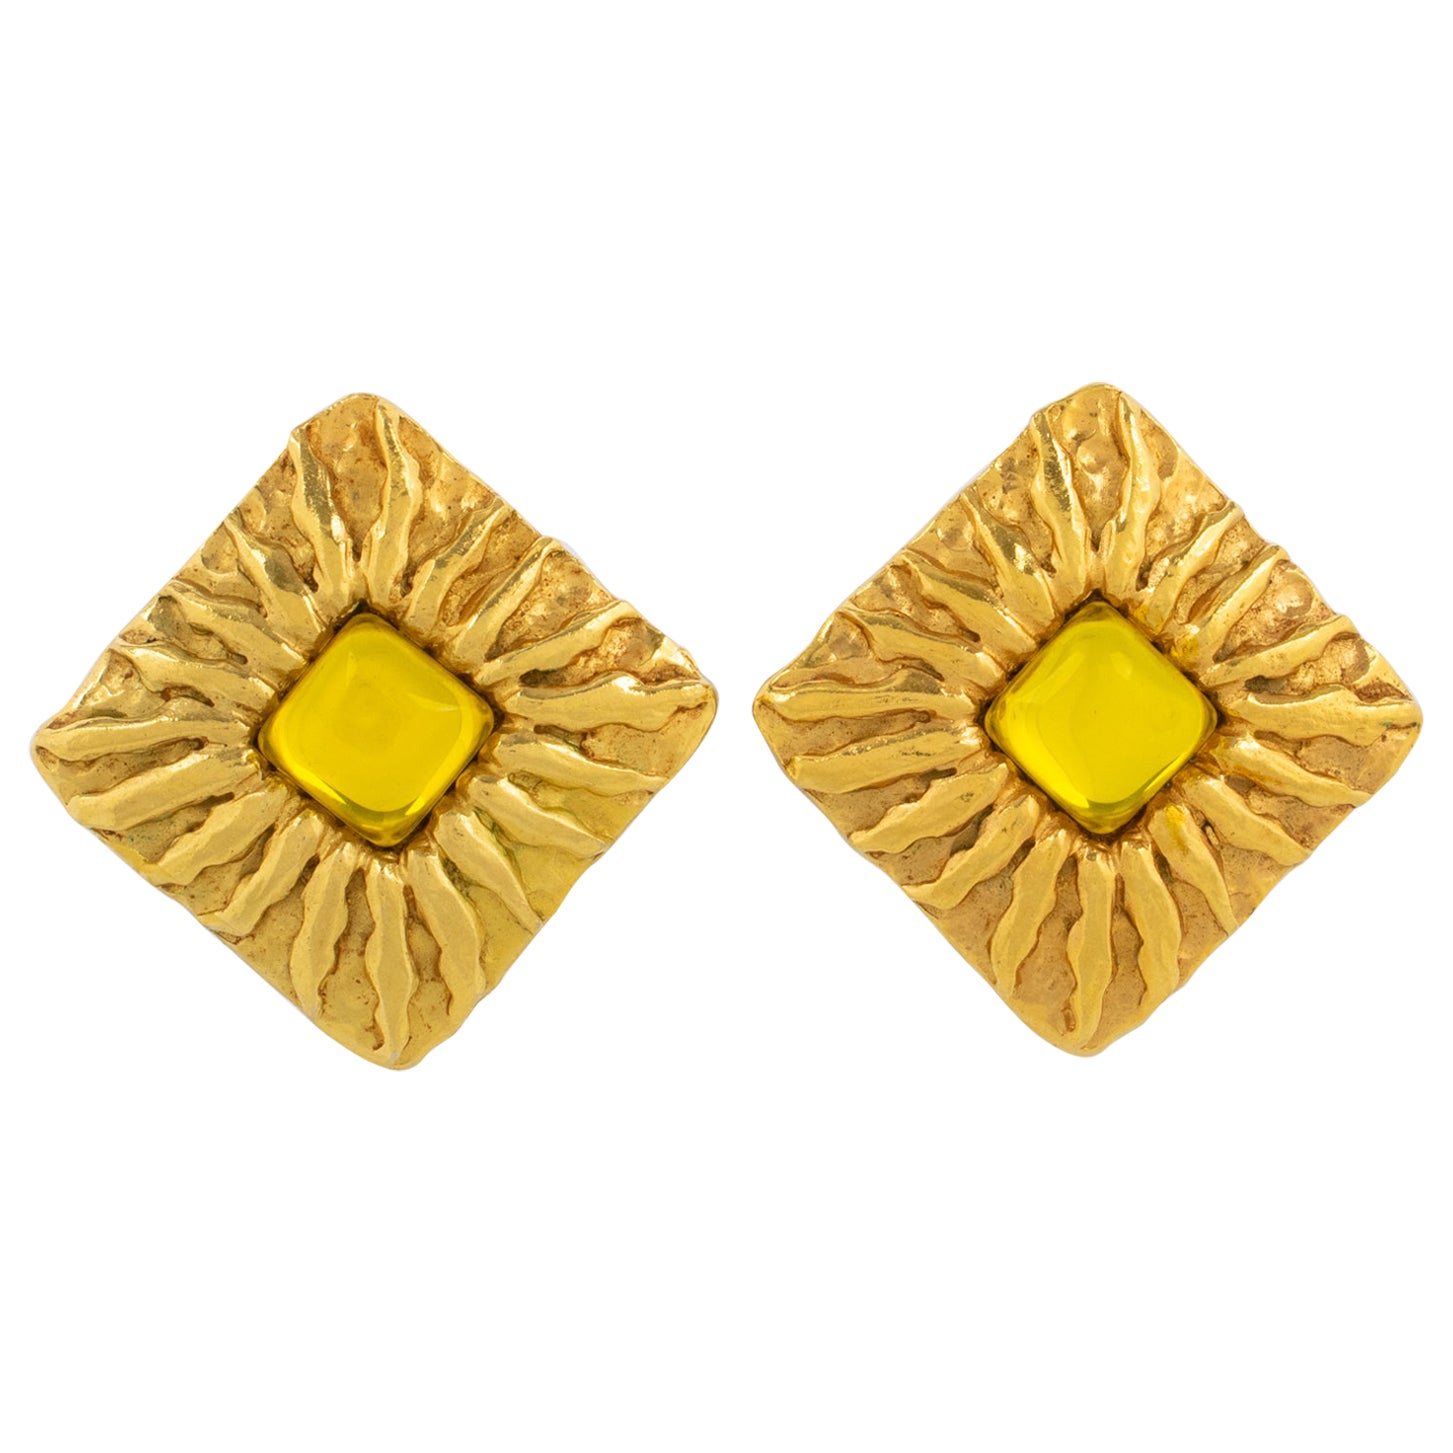 Jean Patou Paris Gilt Metal Sun Clip Earrings with Yellow Poured Glass Cabochon